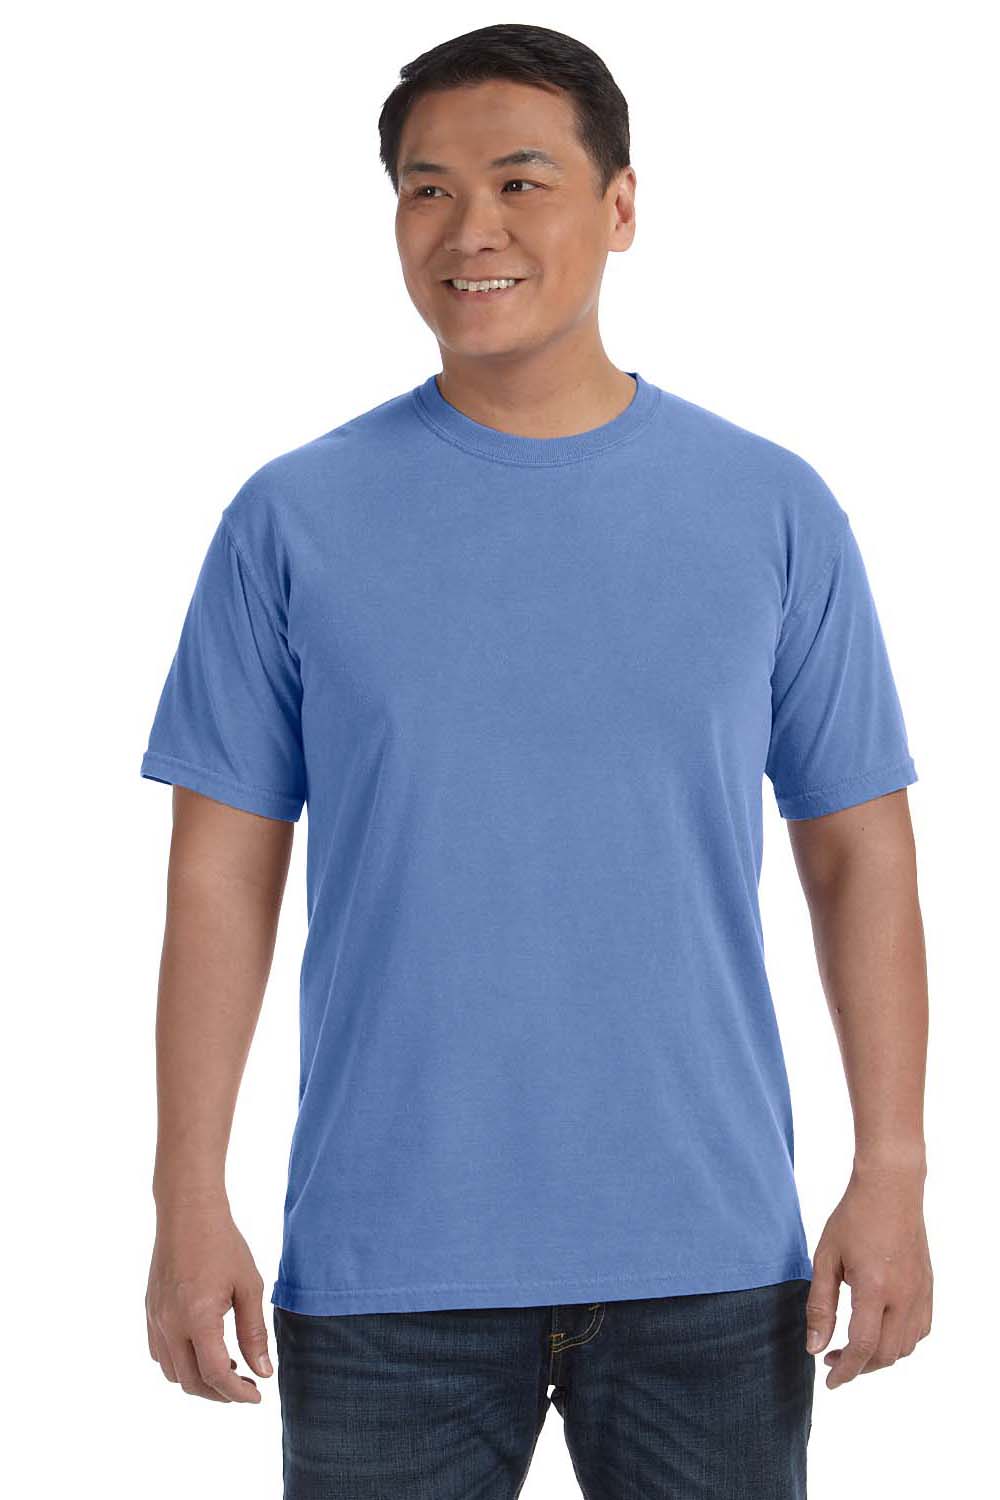 Comfort Colors C1717 Mens Short Sleeve Crewneck T-Shirt Flo Blue Front